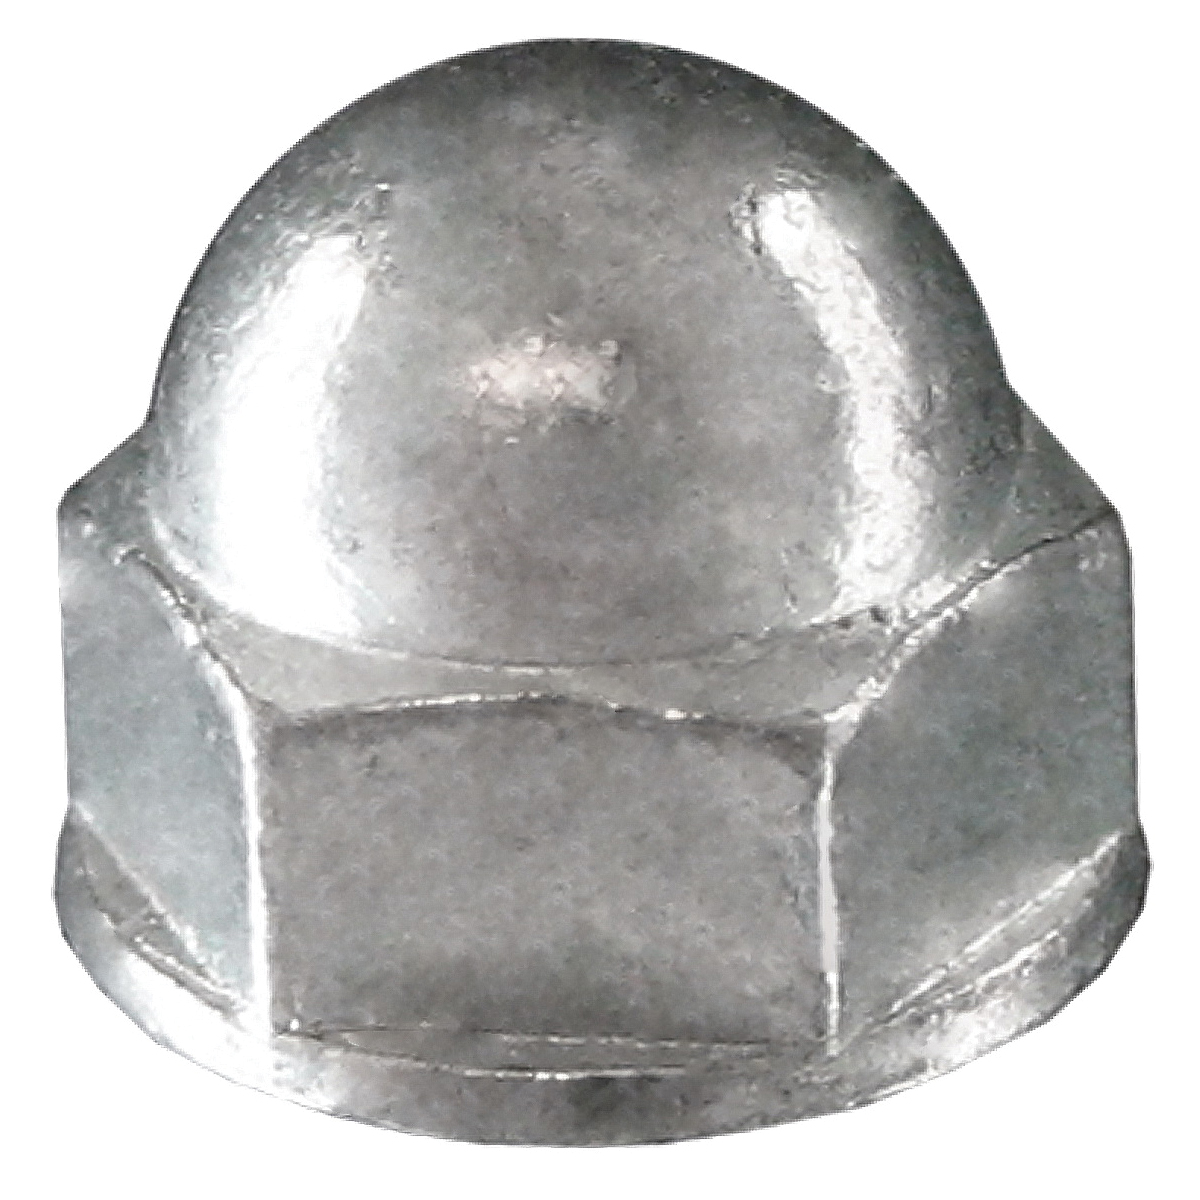 Paulin® 5037-014 Acorn Nut, 1/4-20, Stainless Steel, 18-8 Material Grade